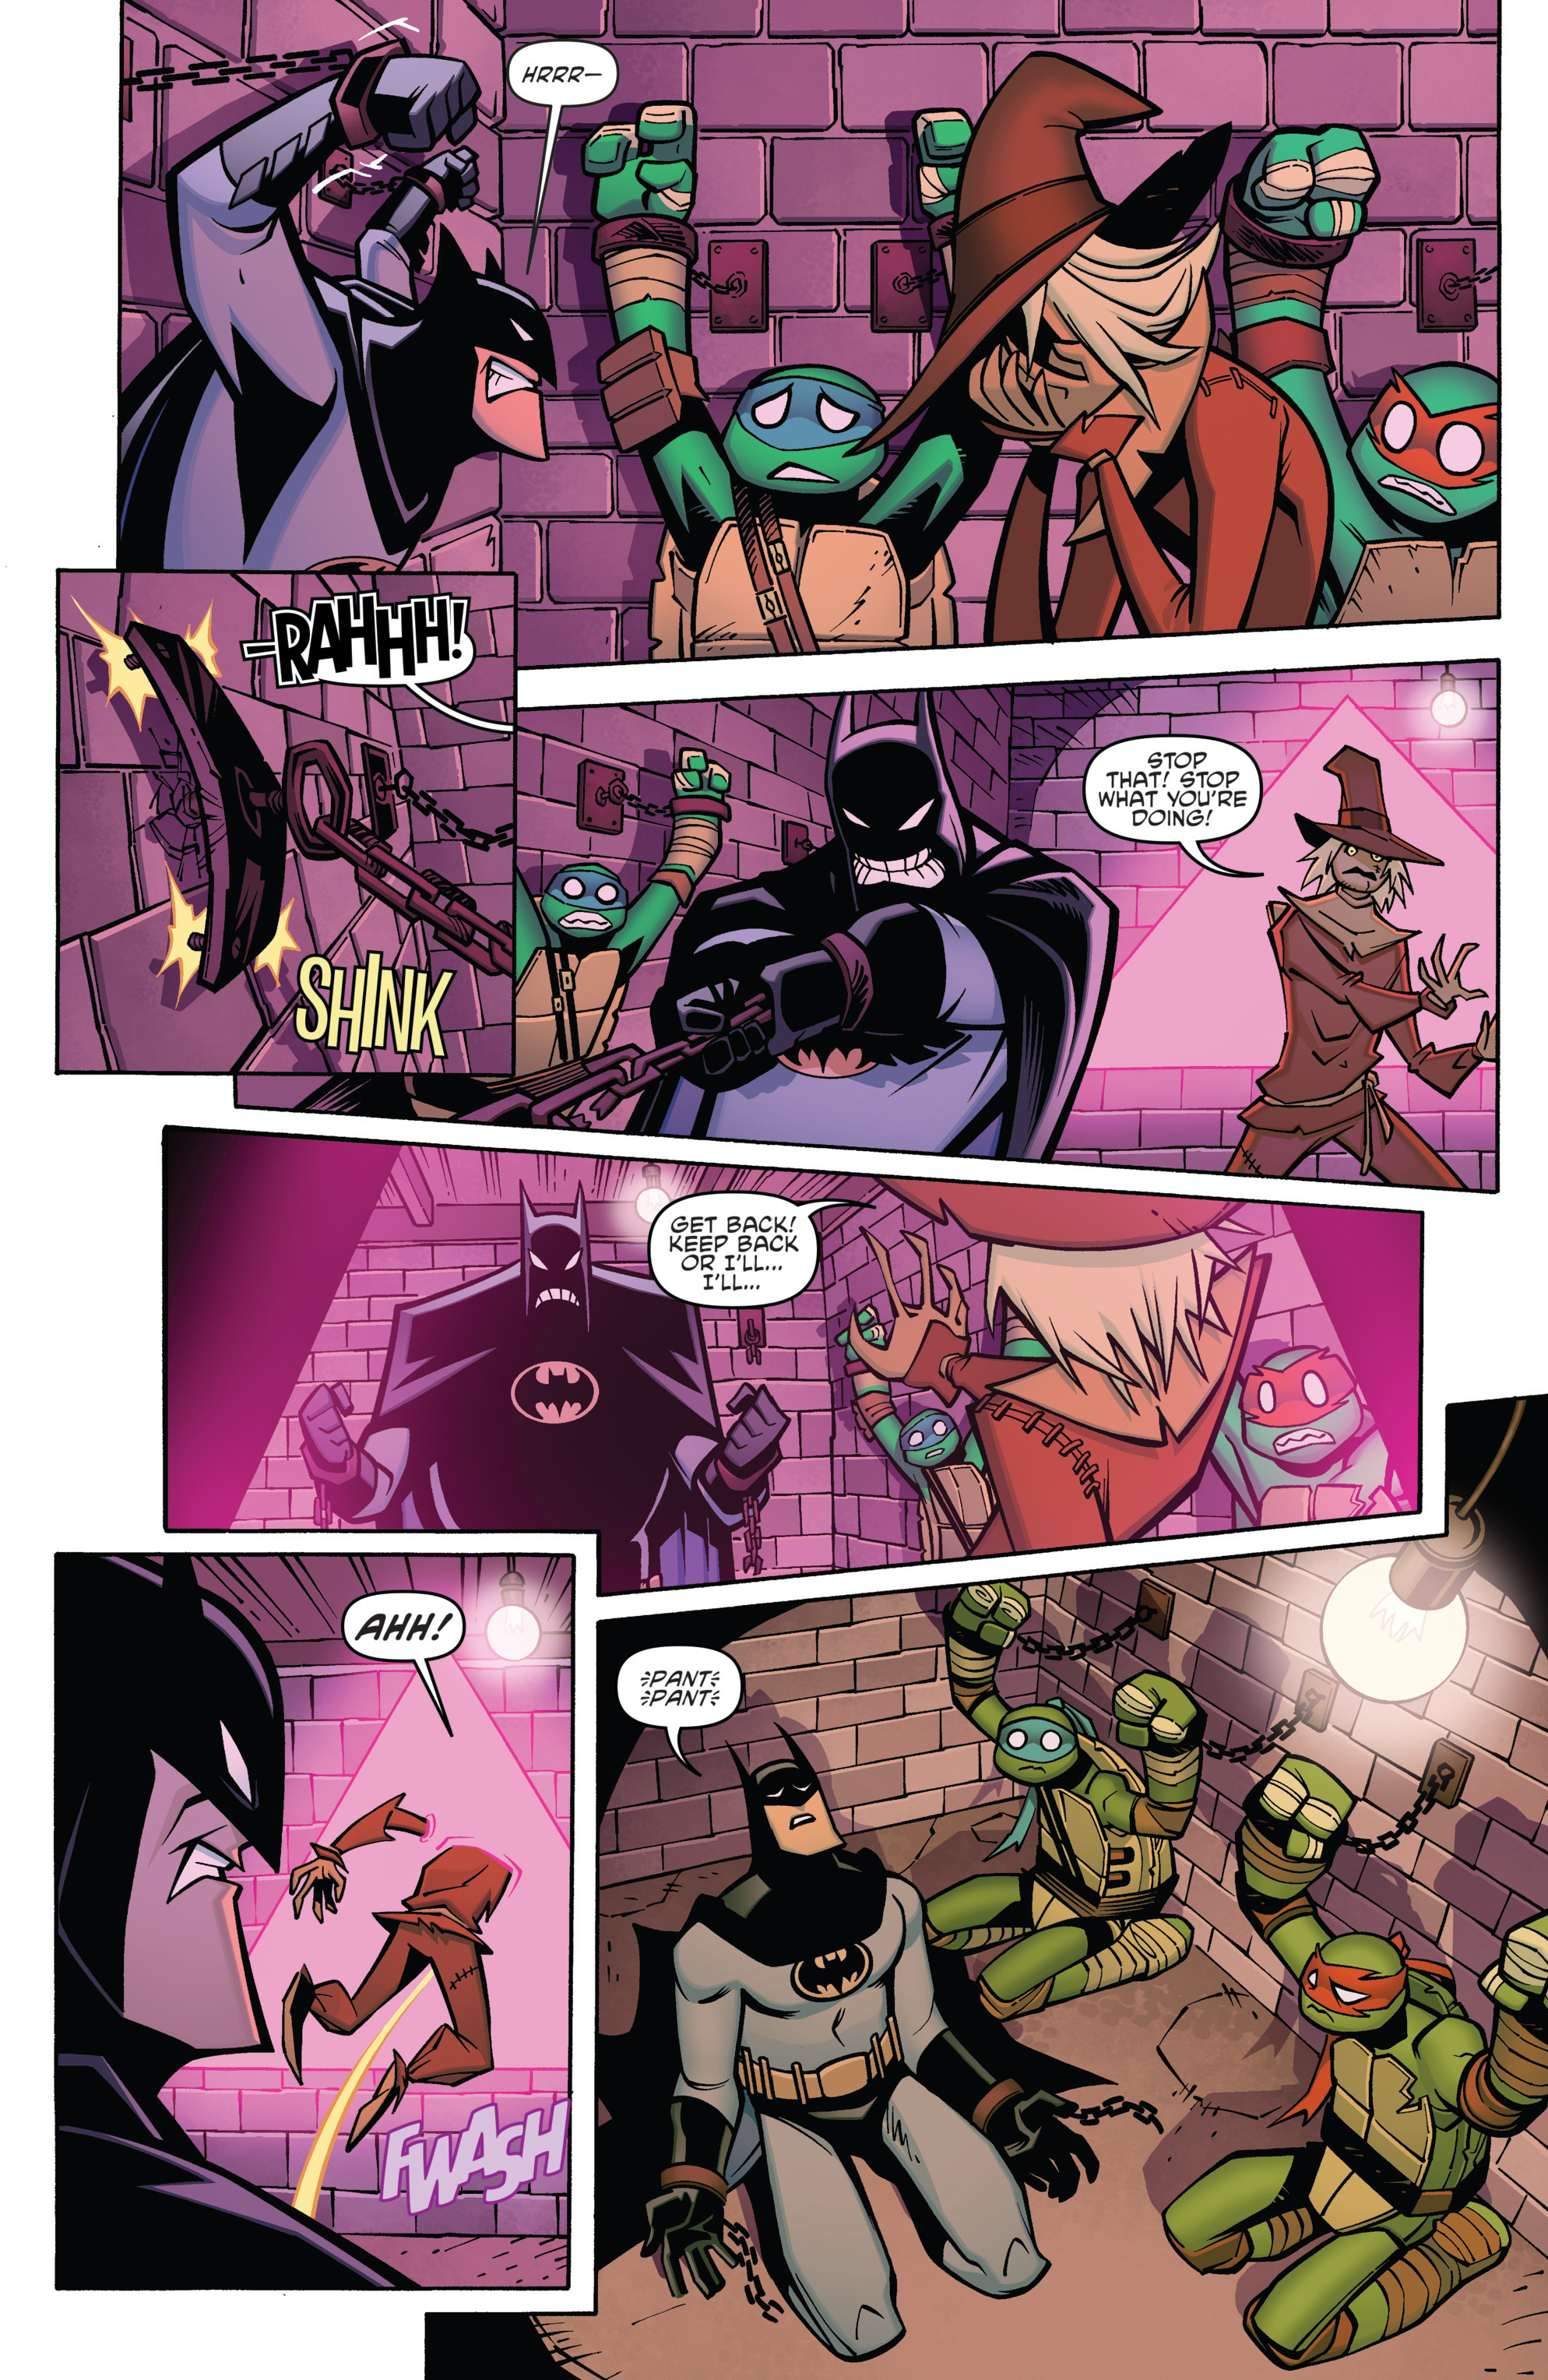 Batman Teenage Mutant Ninja Turtles Adventure Issue 4 | Read Batman Teenage  Mutant Ninja Turtles Adventure Issue 4 comic online in high quality. Read  Full Comic online for free - Read comics